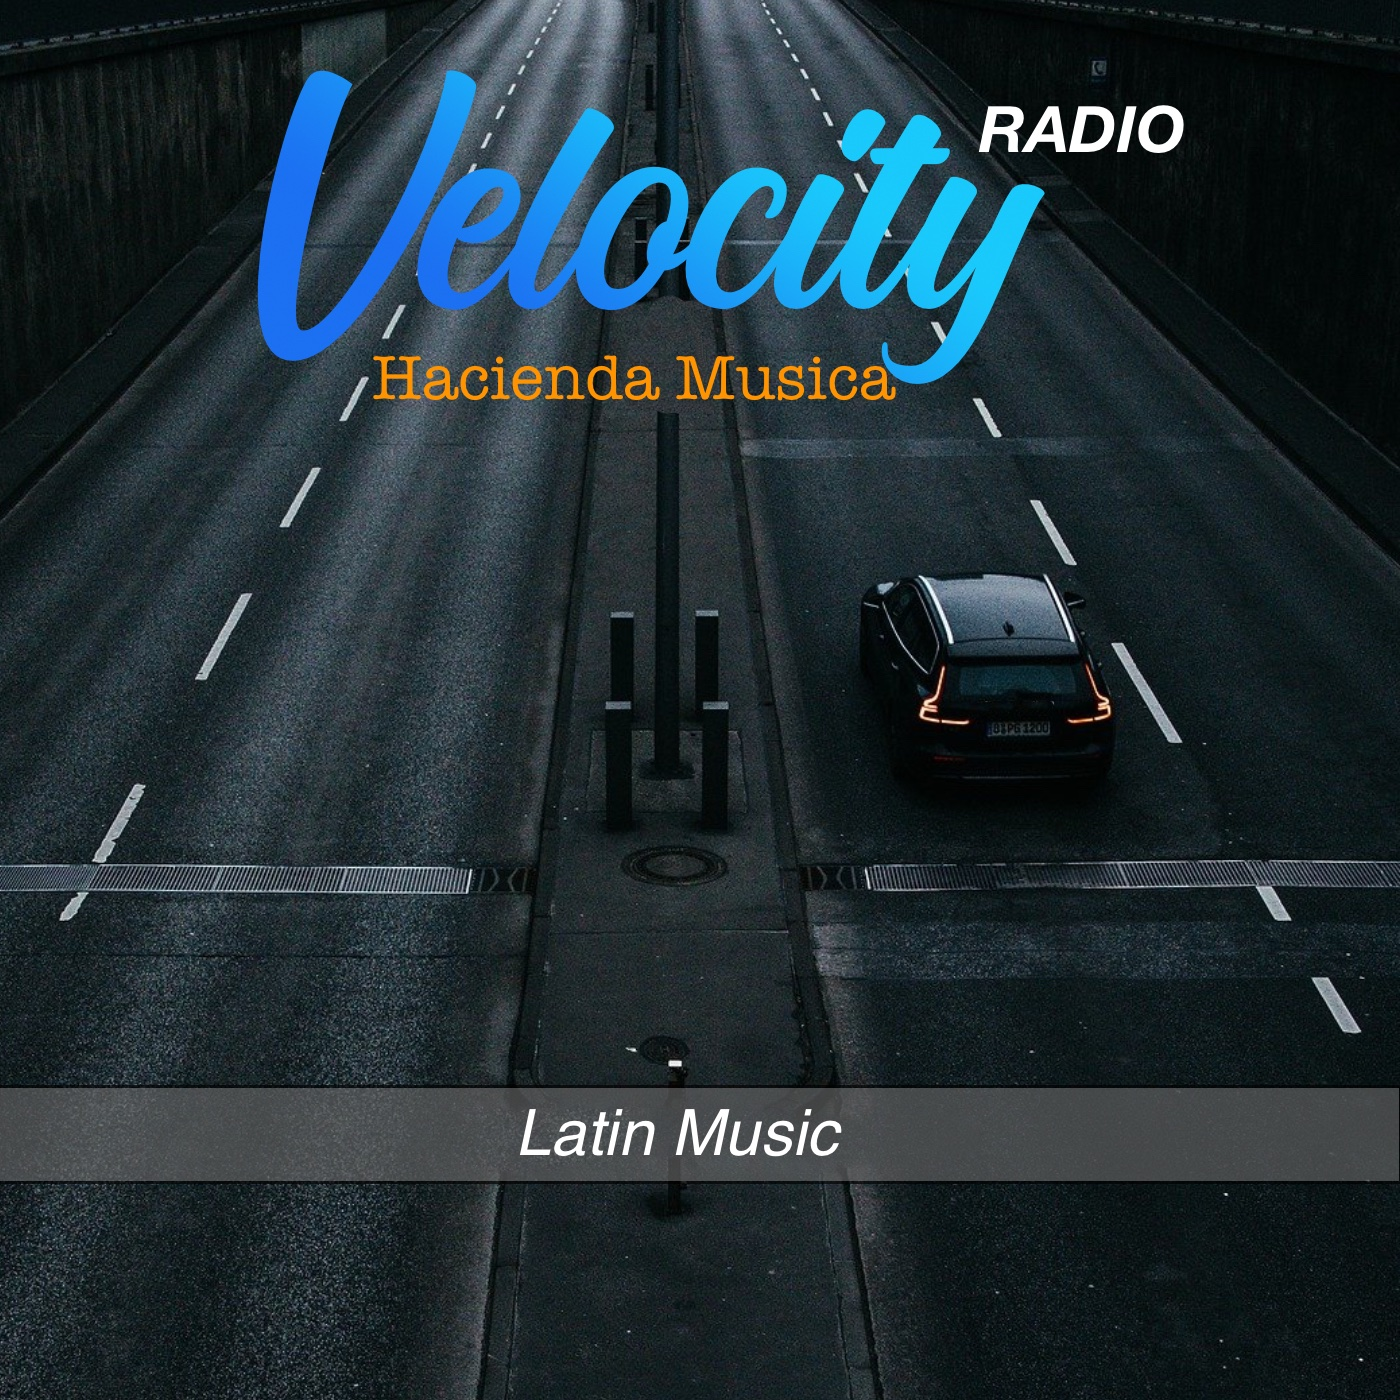 Velocity Radio - Hacienda Musica